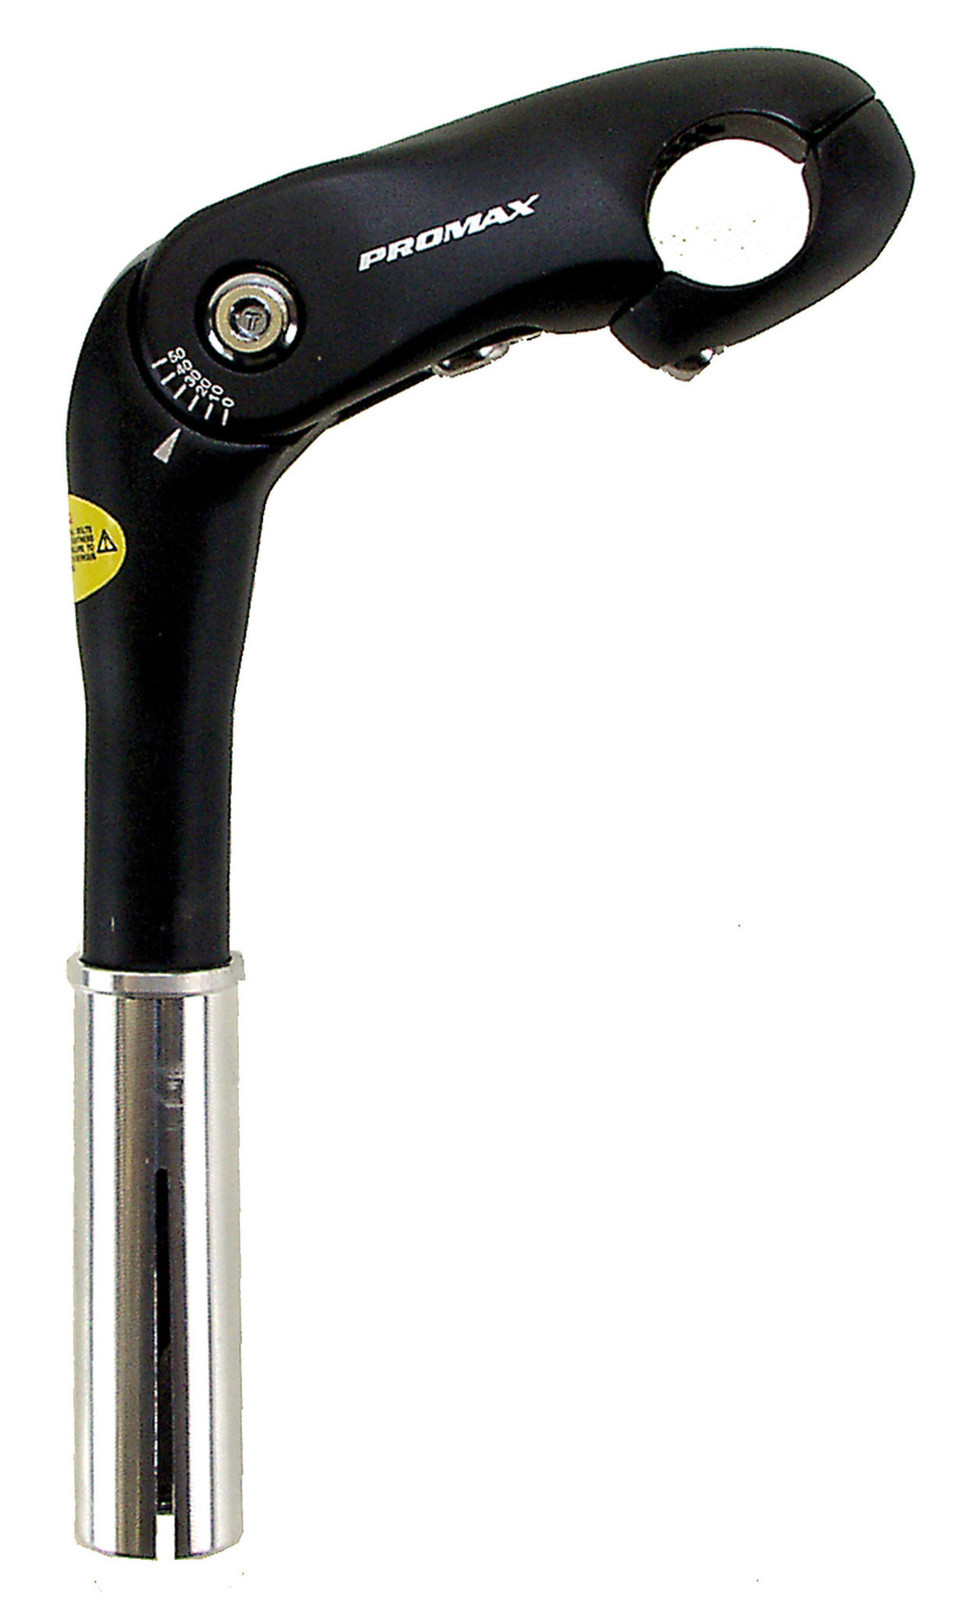  Stem Adjustable Promax Alloy 22.2/25.4mm 85/185mm Black  Stem Adjustable Promax Alloy 22.2/25.4mm 85/185mm Black